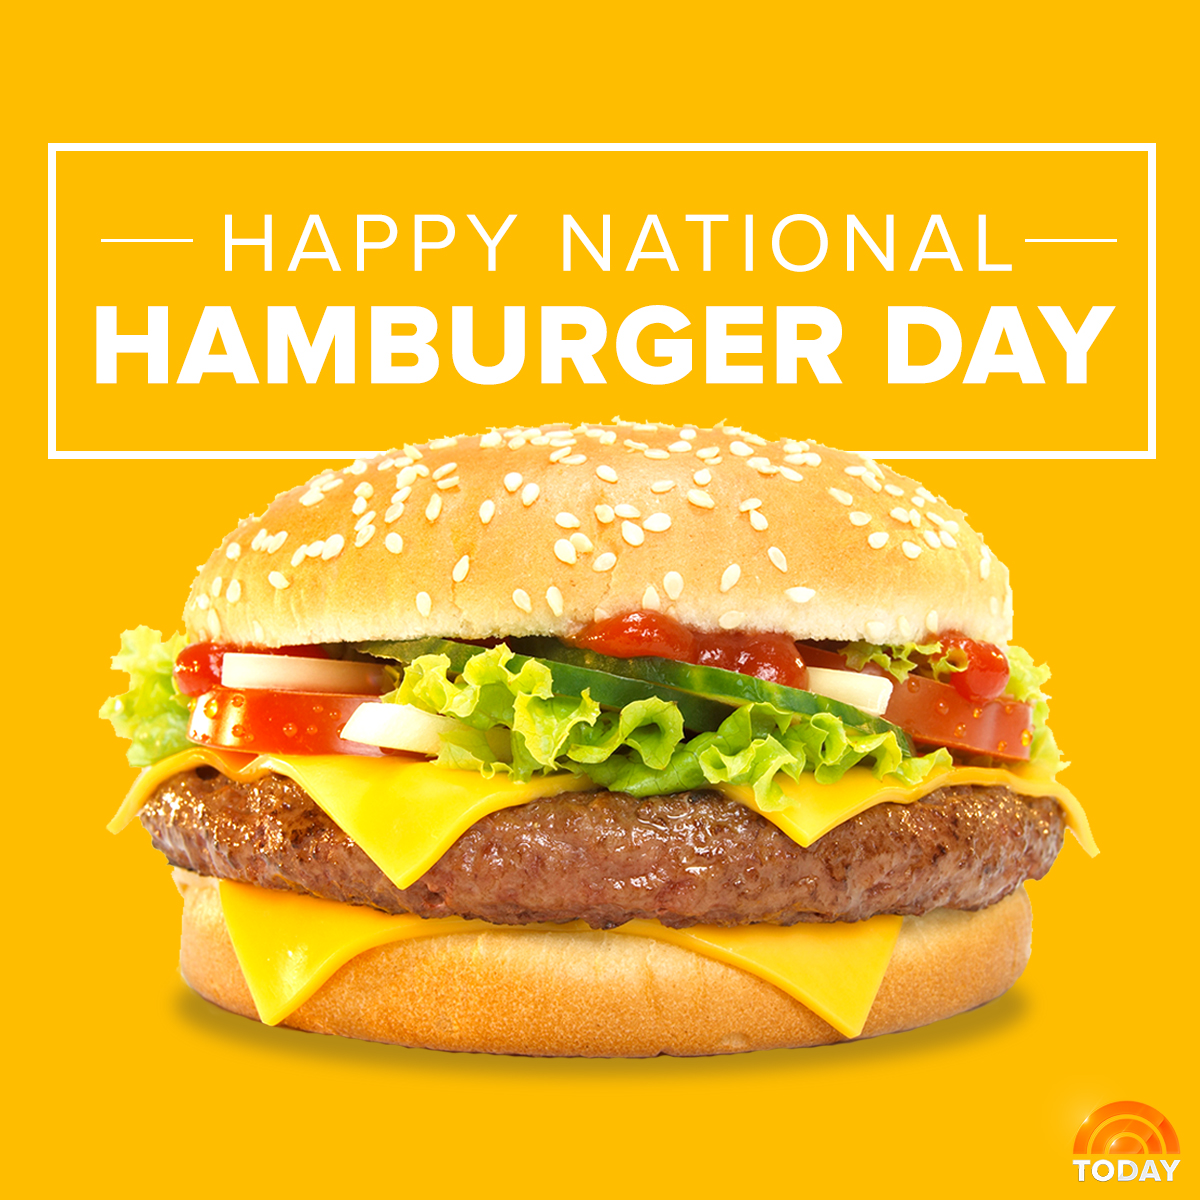 NationalDay-Hamburger-260717.jpg